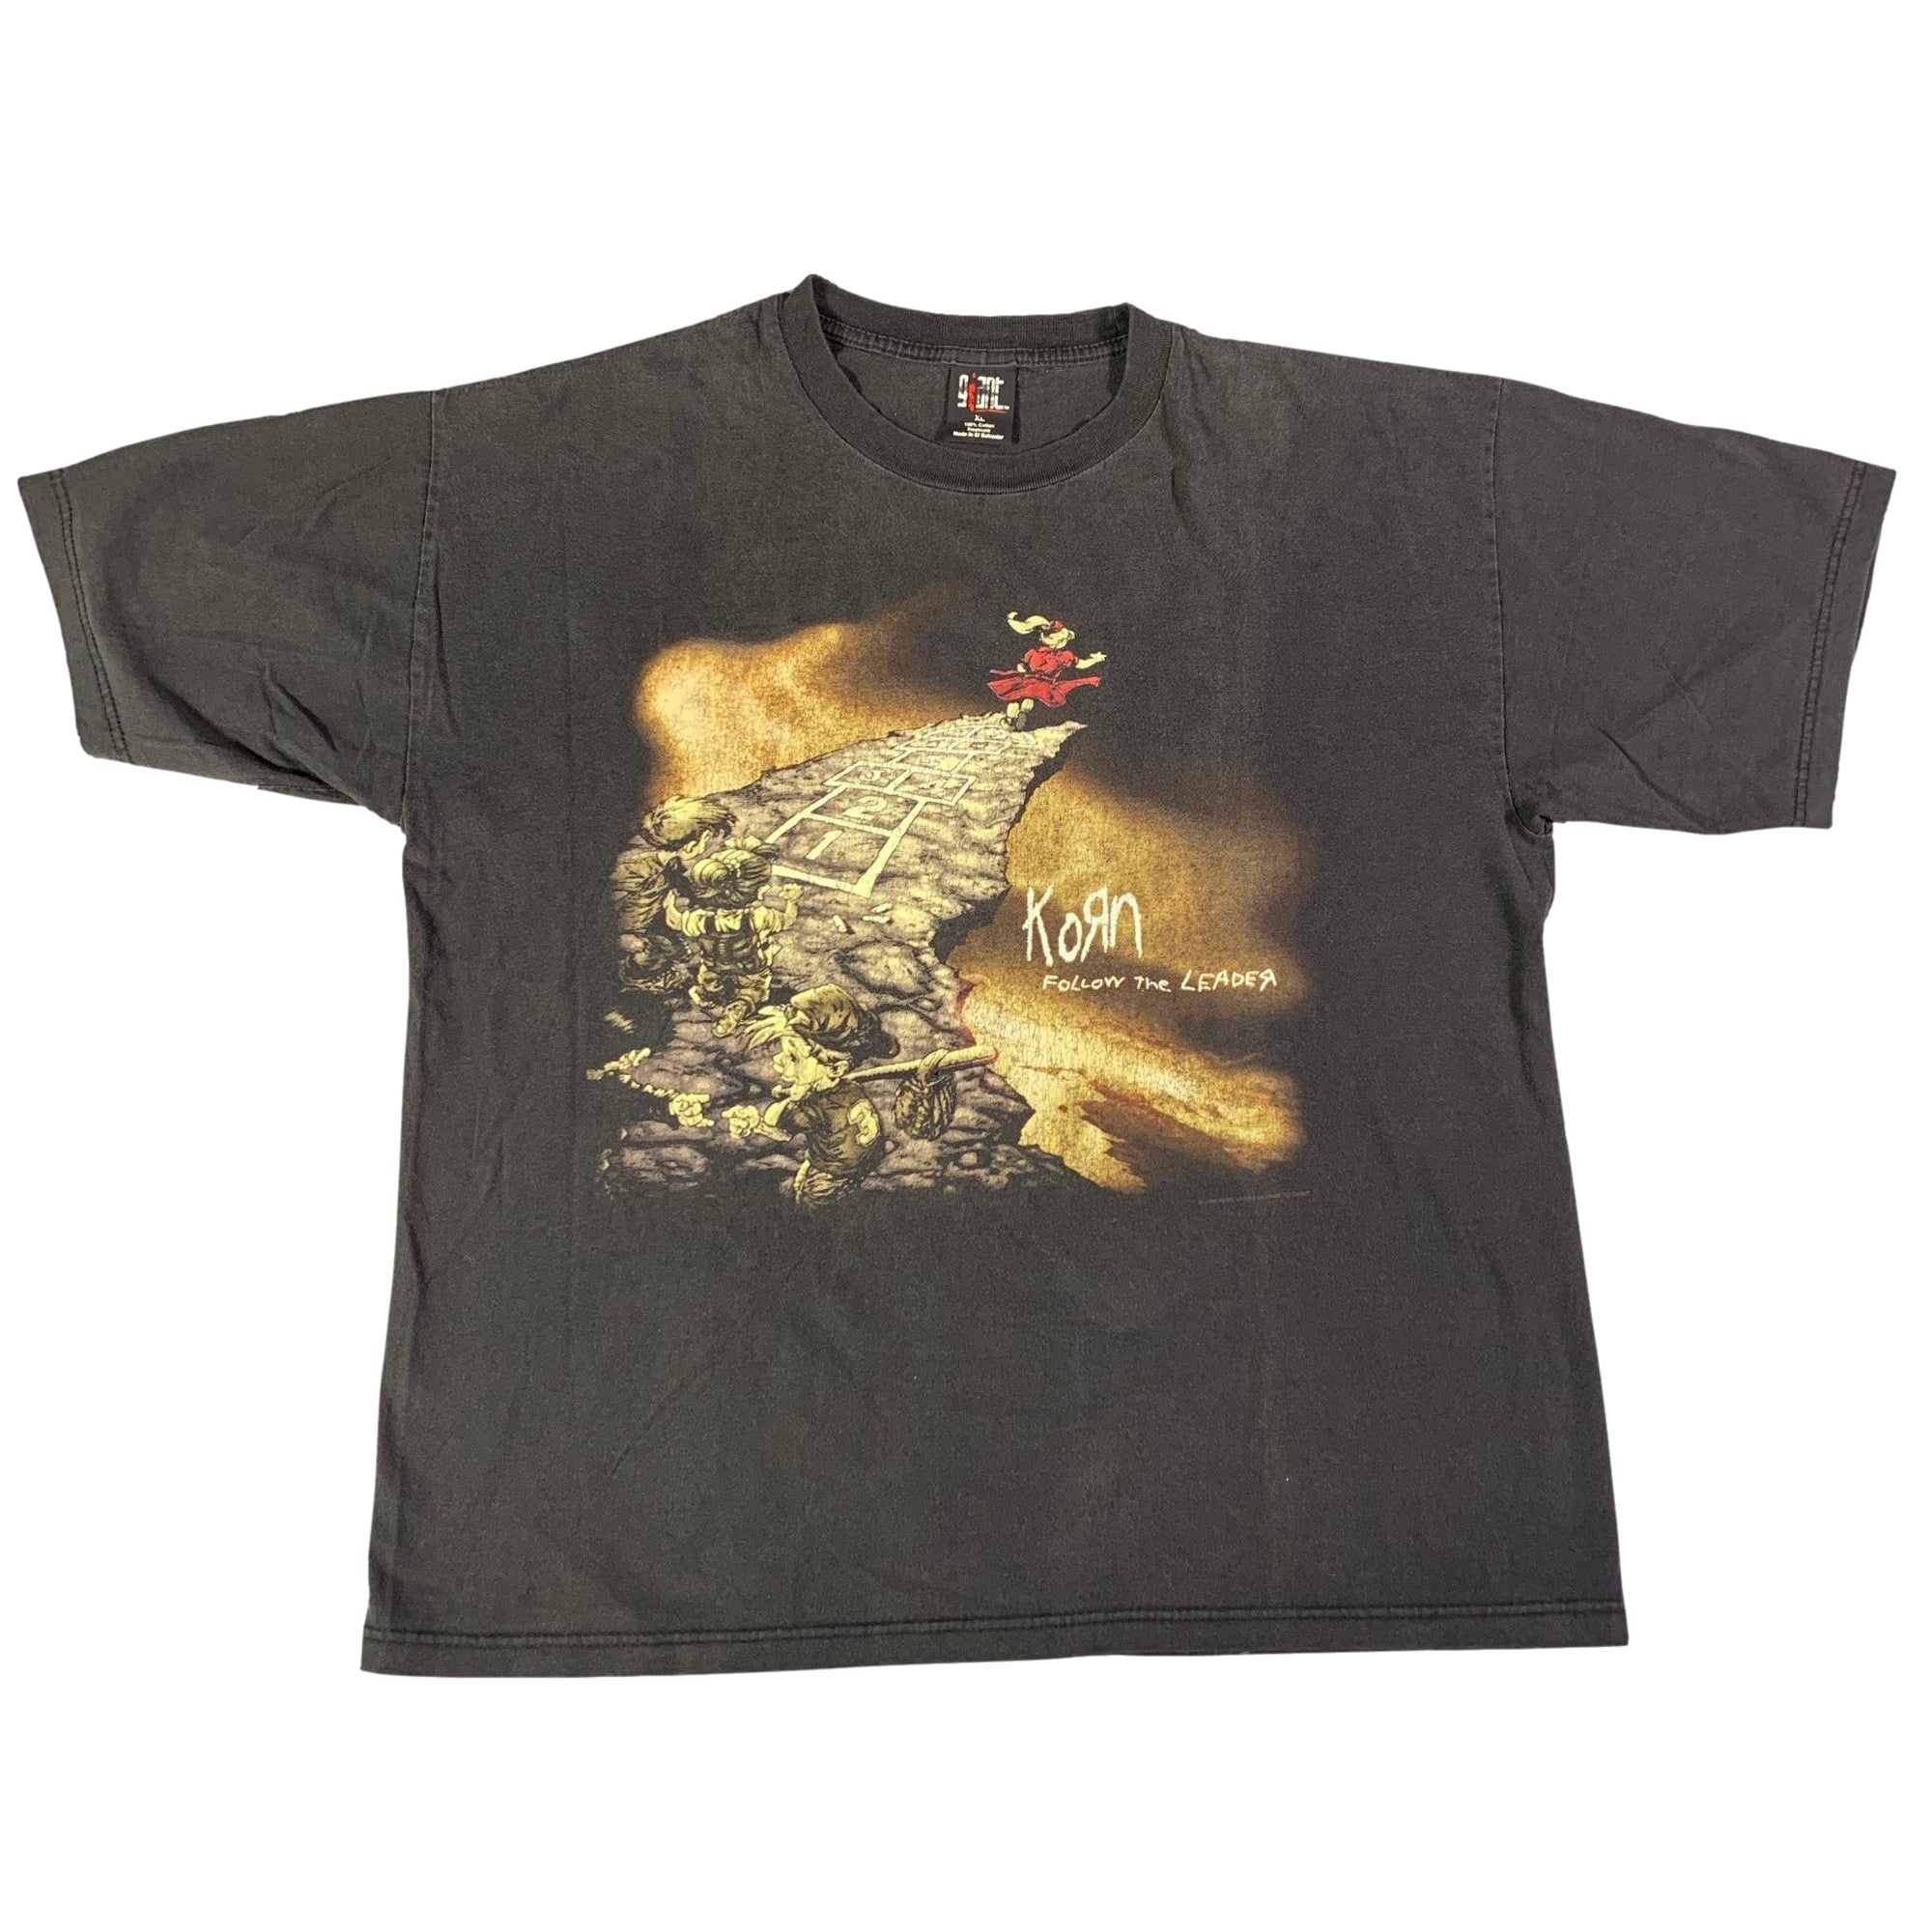 Vintage Korn "Follow The Leader" T-Shirt - jointcustodydc